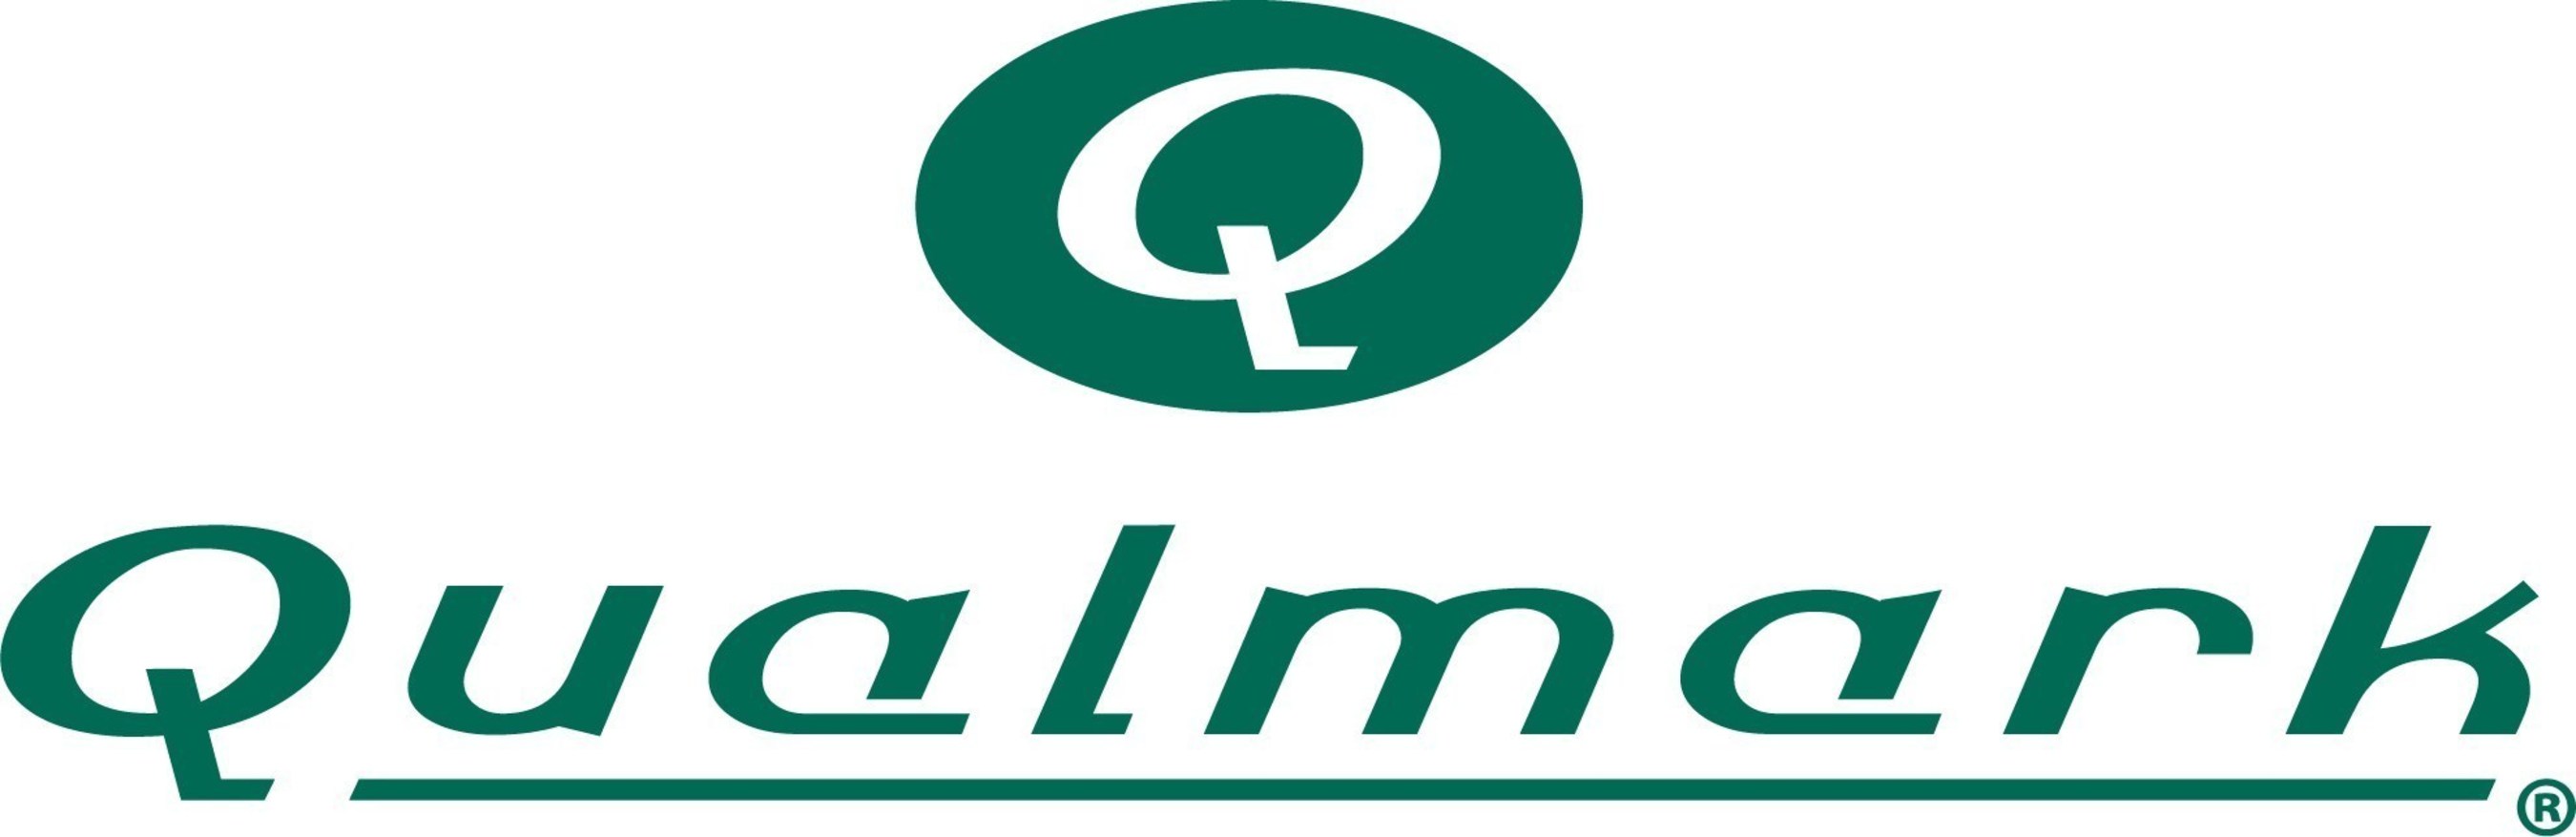 Qualmark Corporation Logo